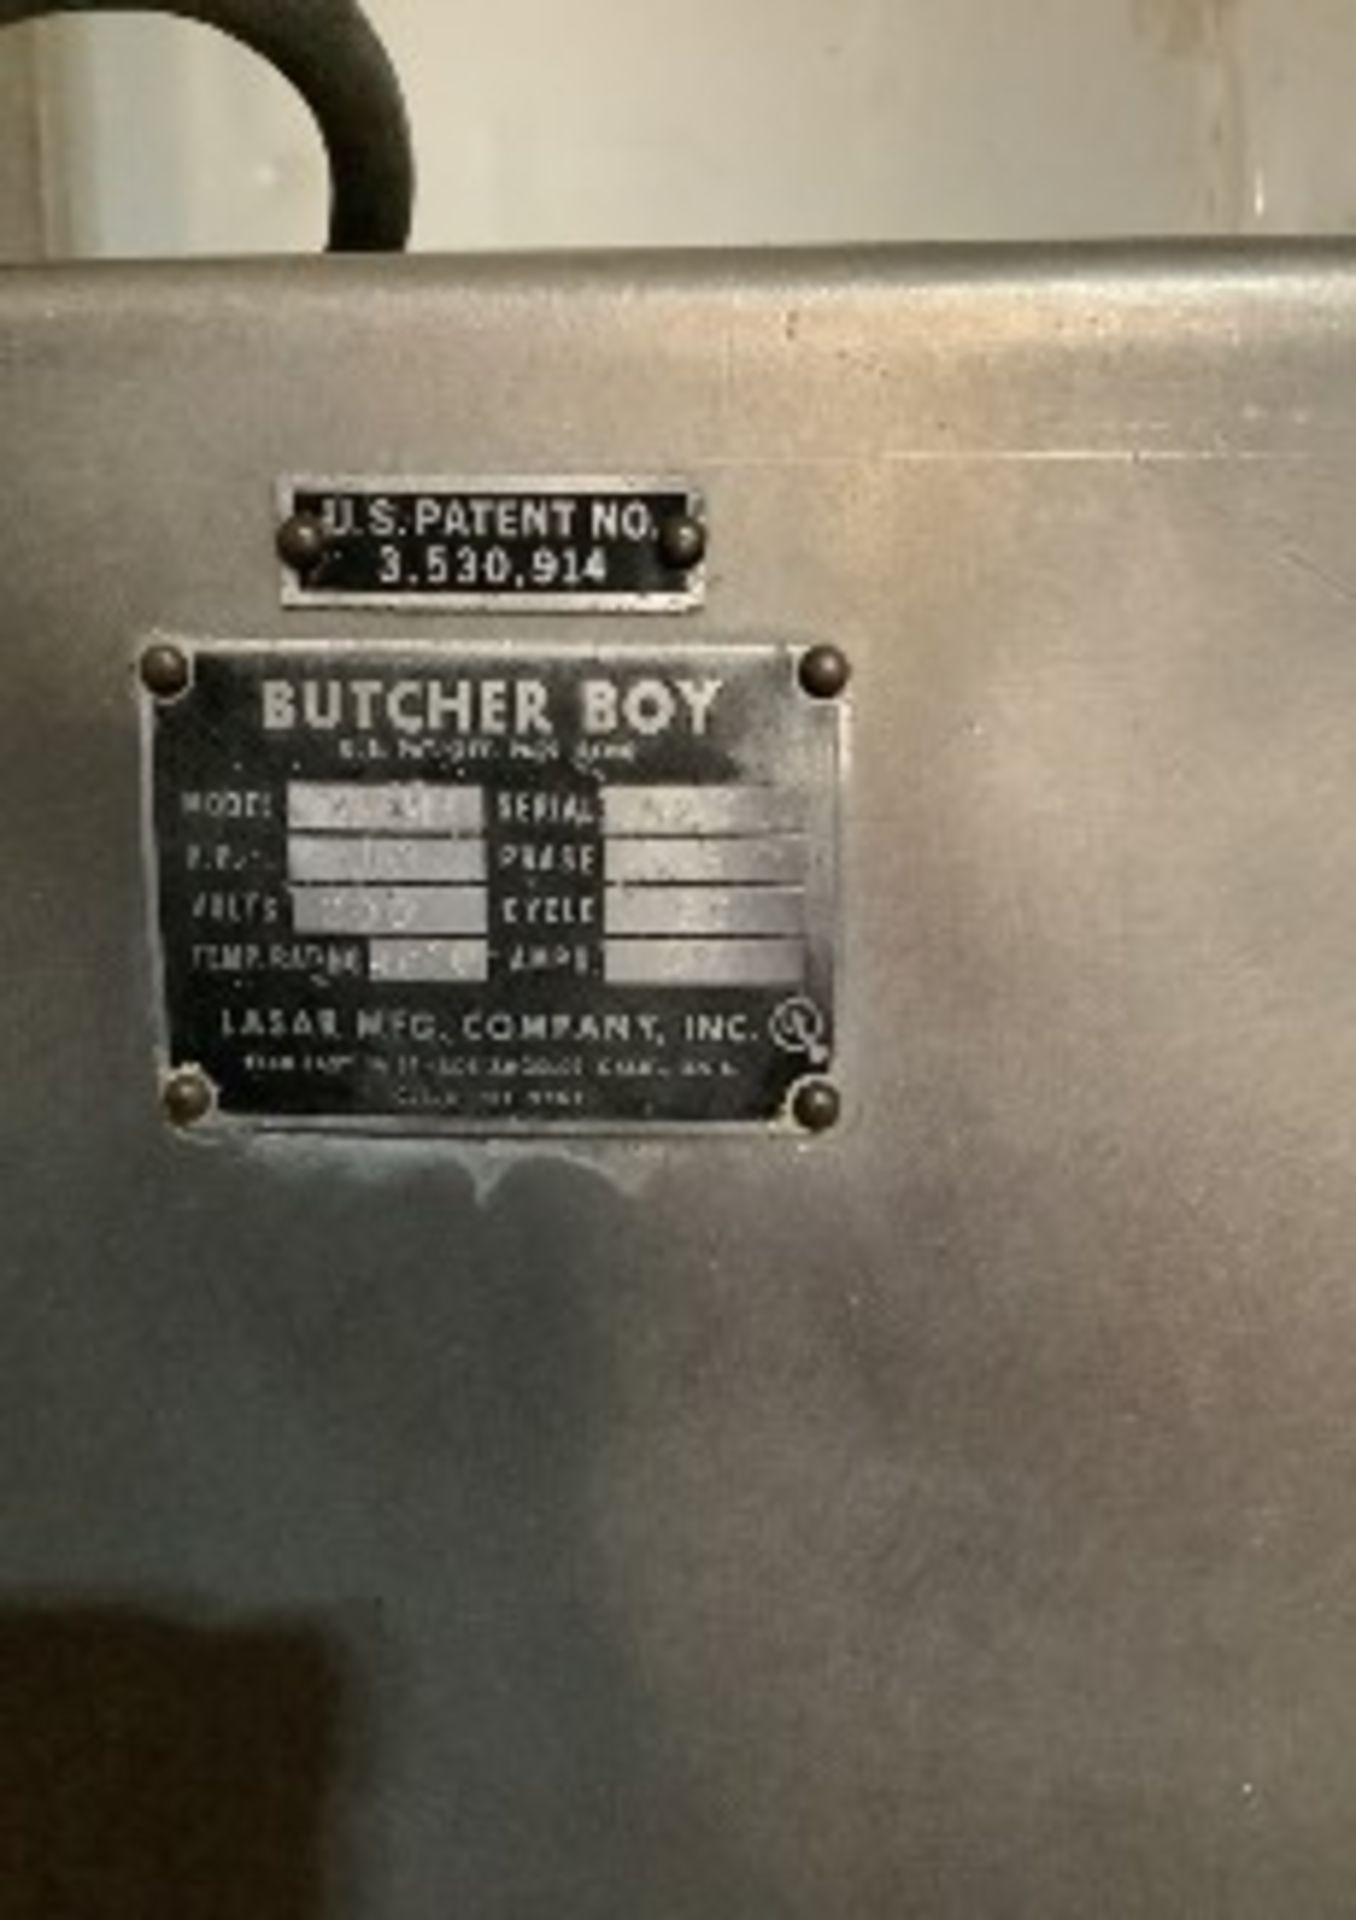 Butcher Boy Flaker, Model AU-MF, S/N 522, Volt 230, Phse 3 (Loading Fee $100) (Located Oklahoma - Image 4 of 4